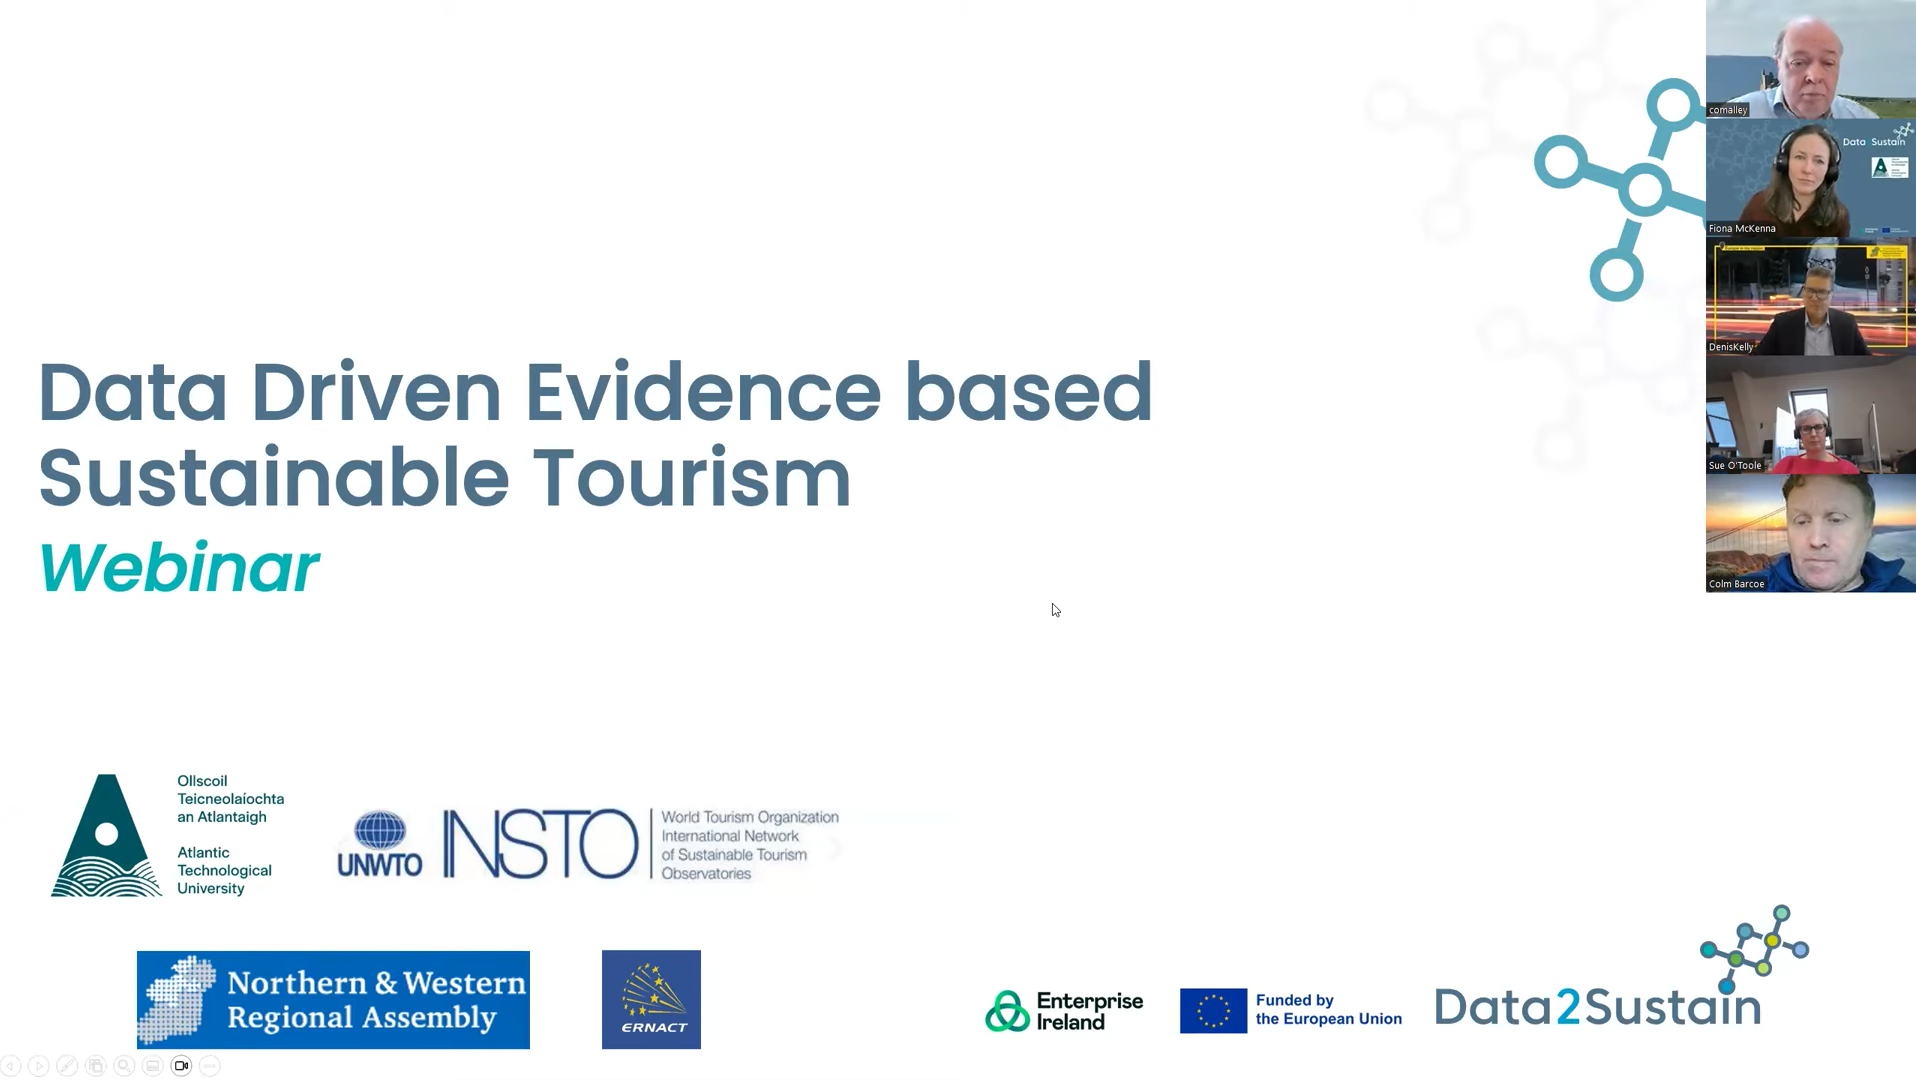 Data-Driven, Evidence-Based Sustainable Tourism Webinar